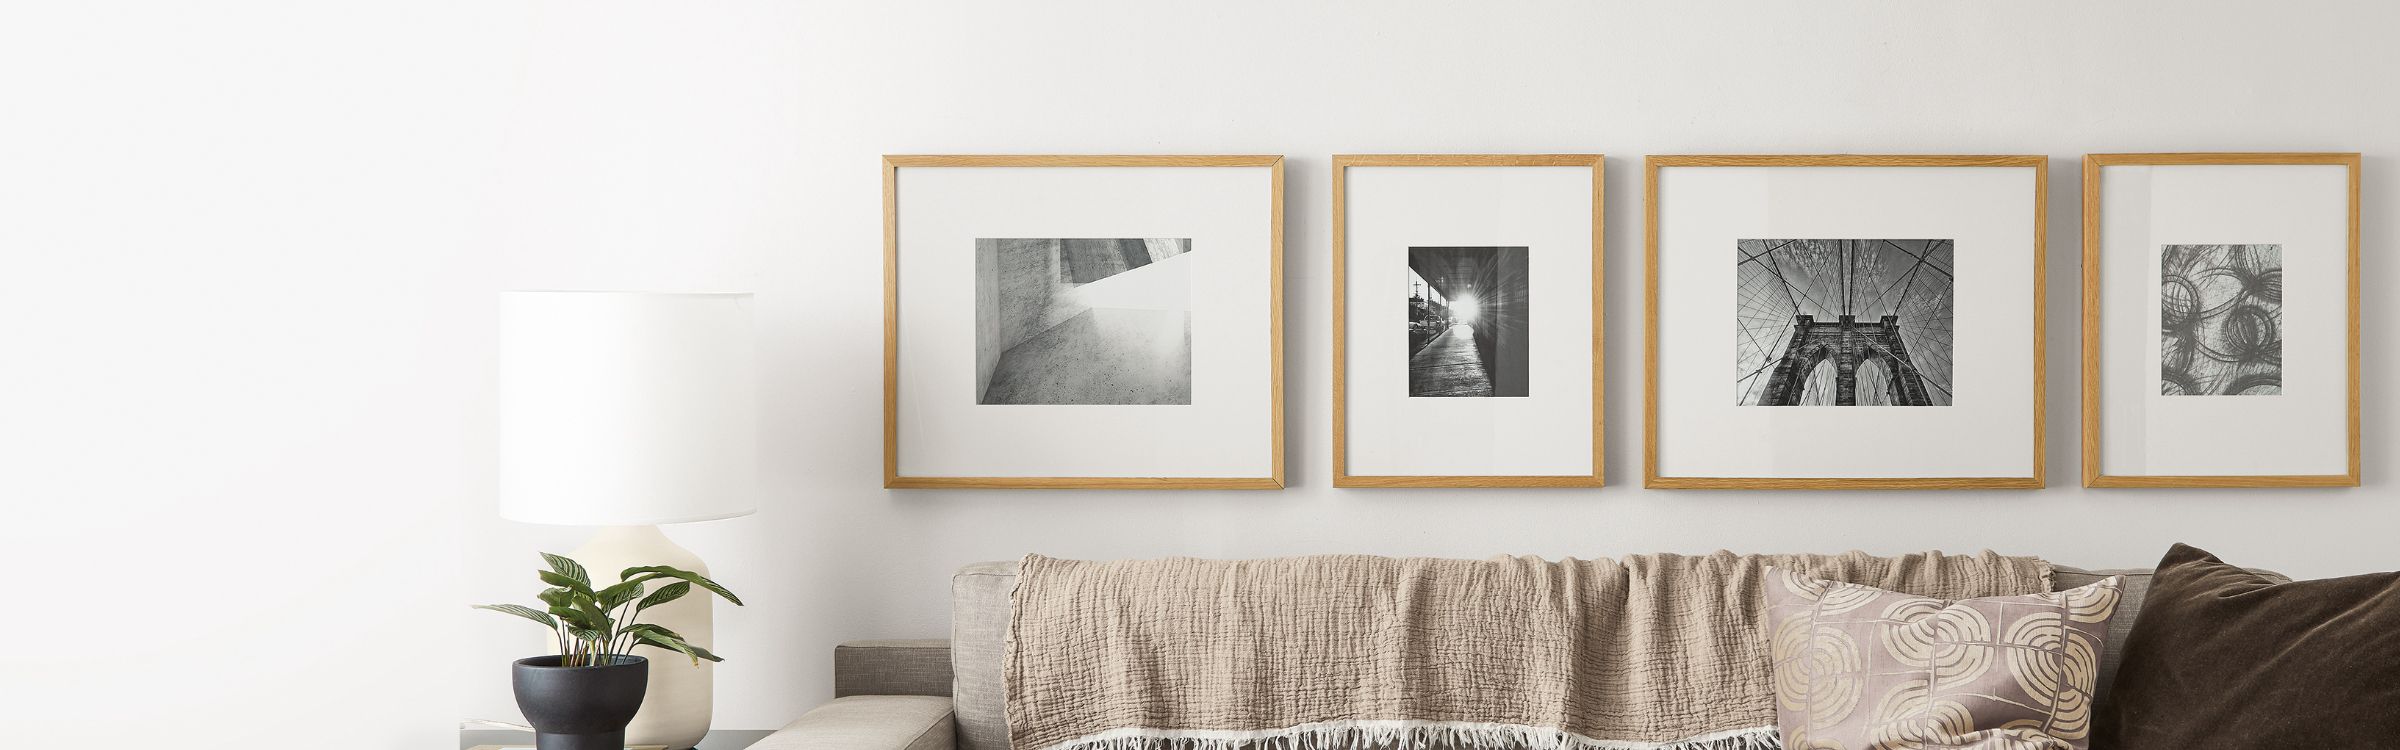 Modern Picture Frames - Room & Board